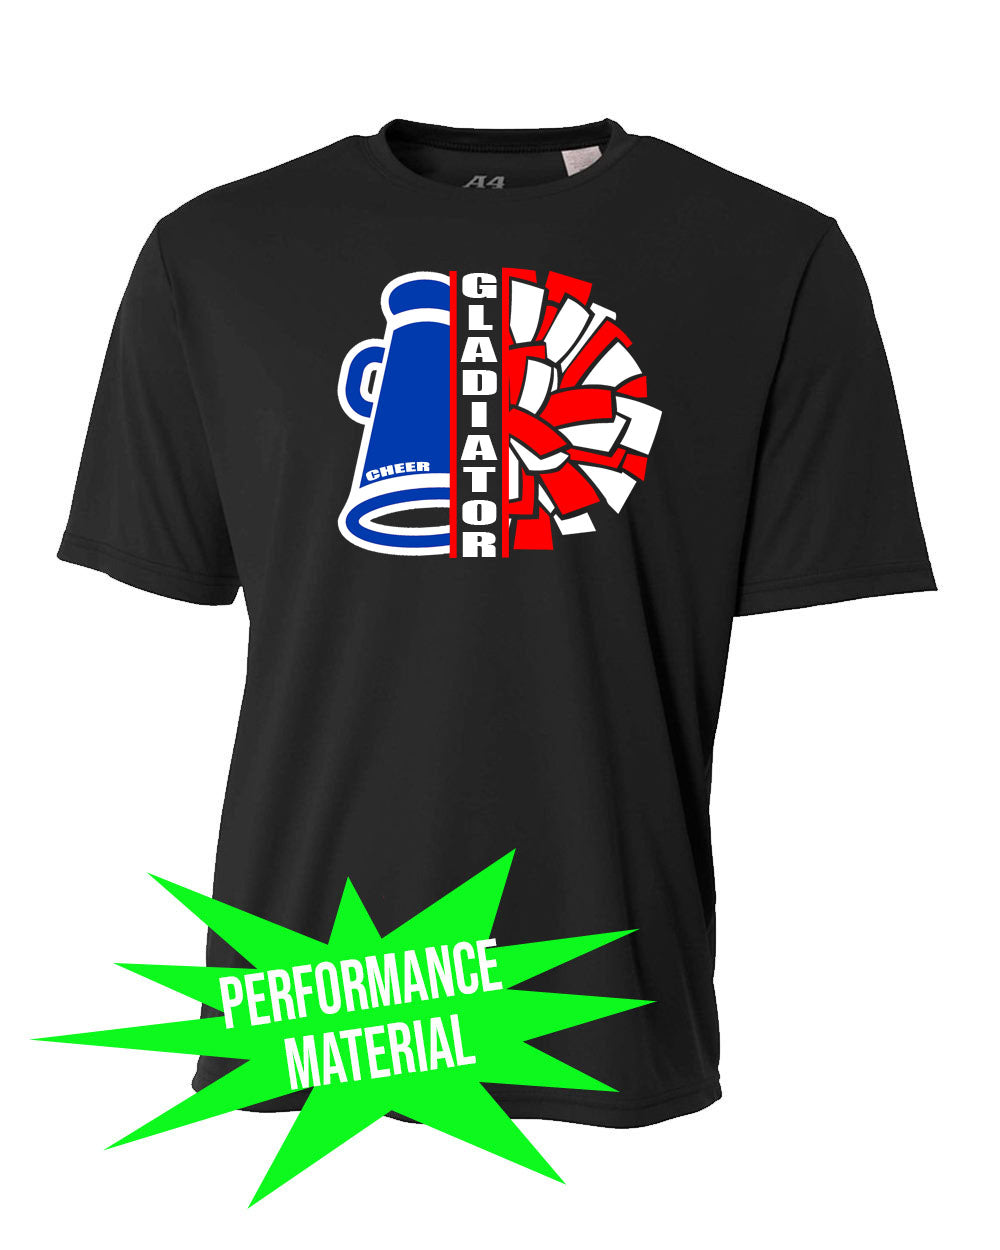 Goshen Cheer Performance Material design 10 T-Shirt